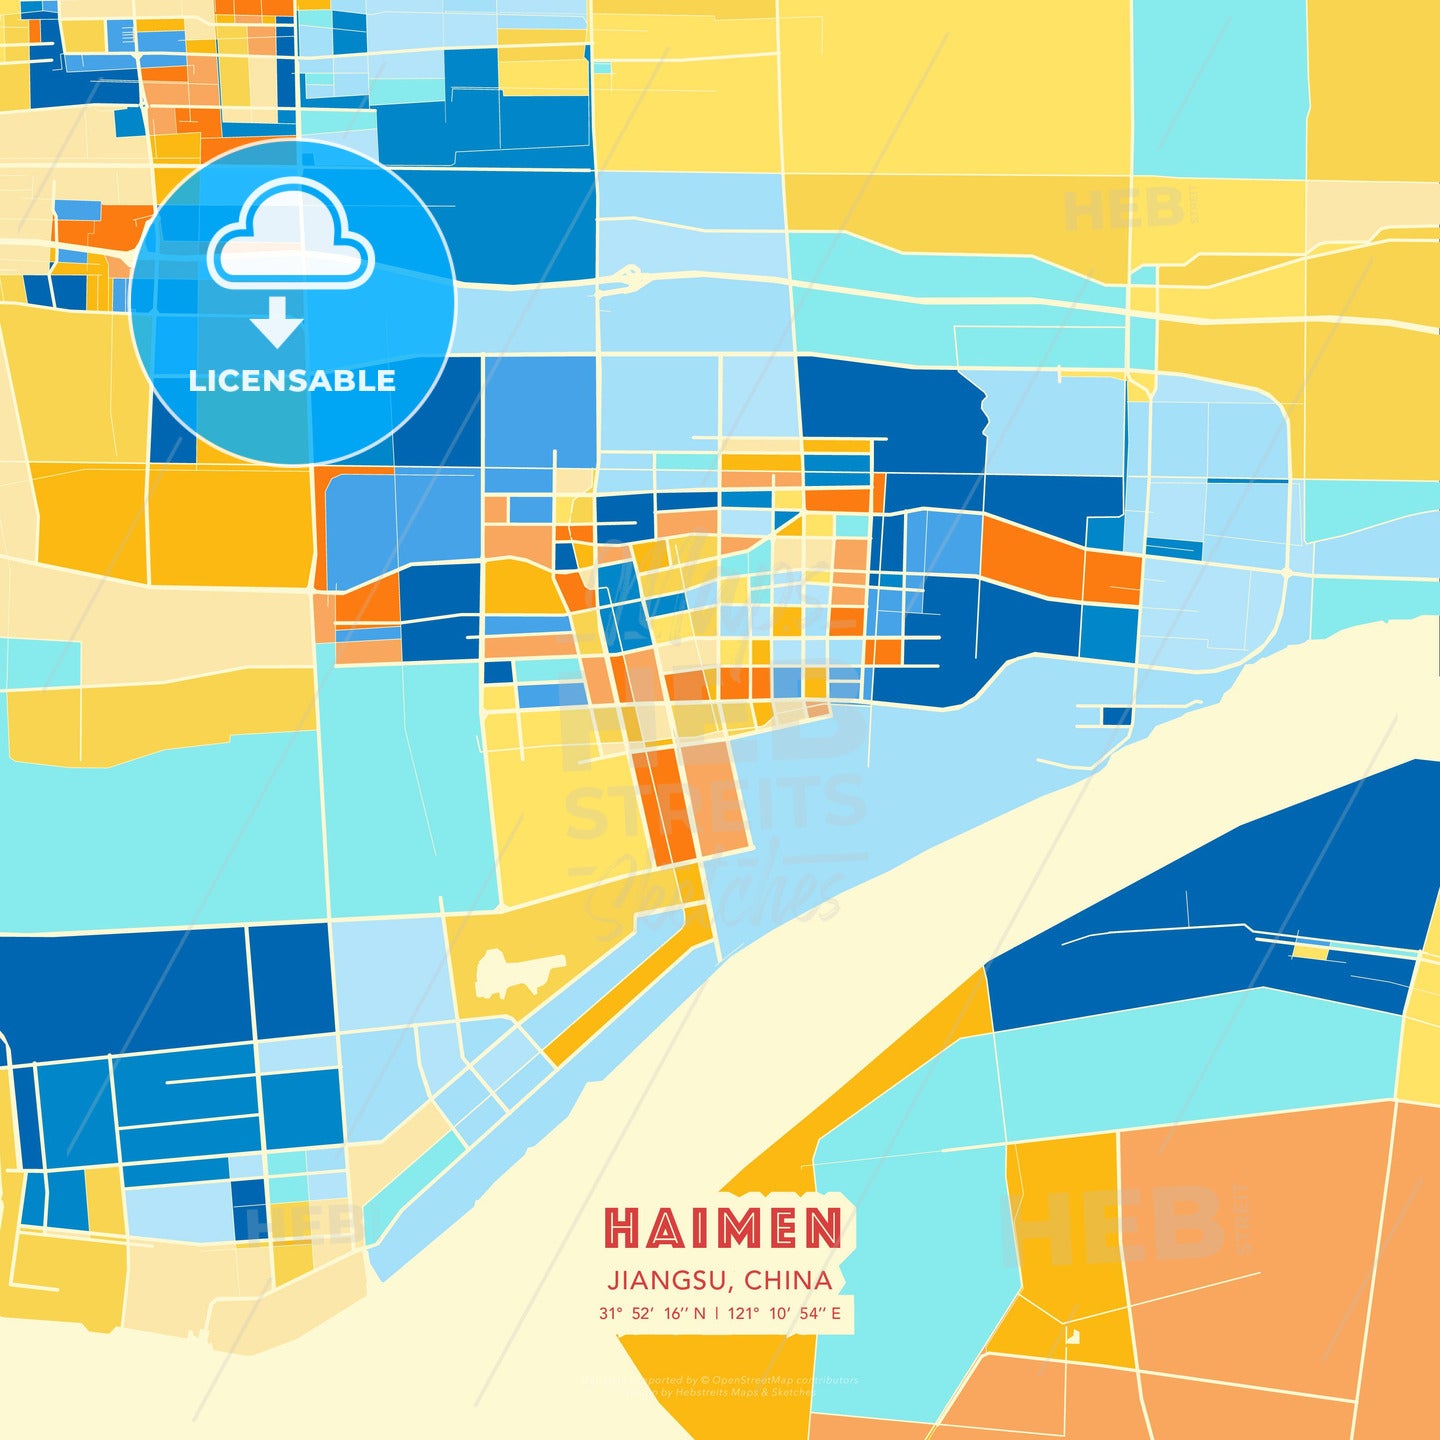 Haimen, Jiangsu, China, map - HEBSTREITS Sketches